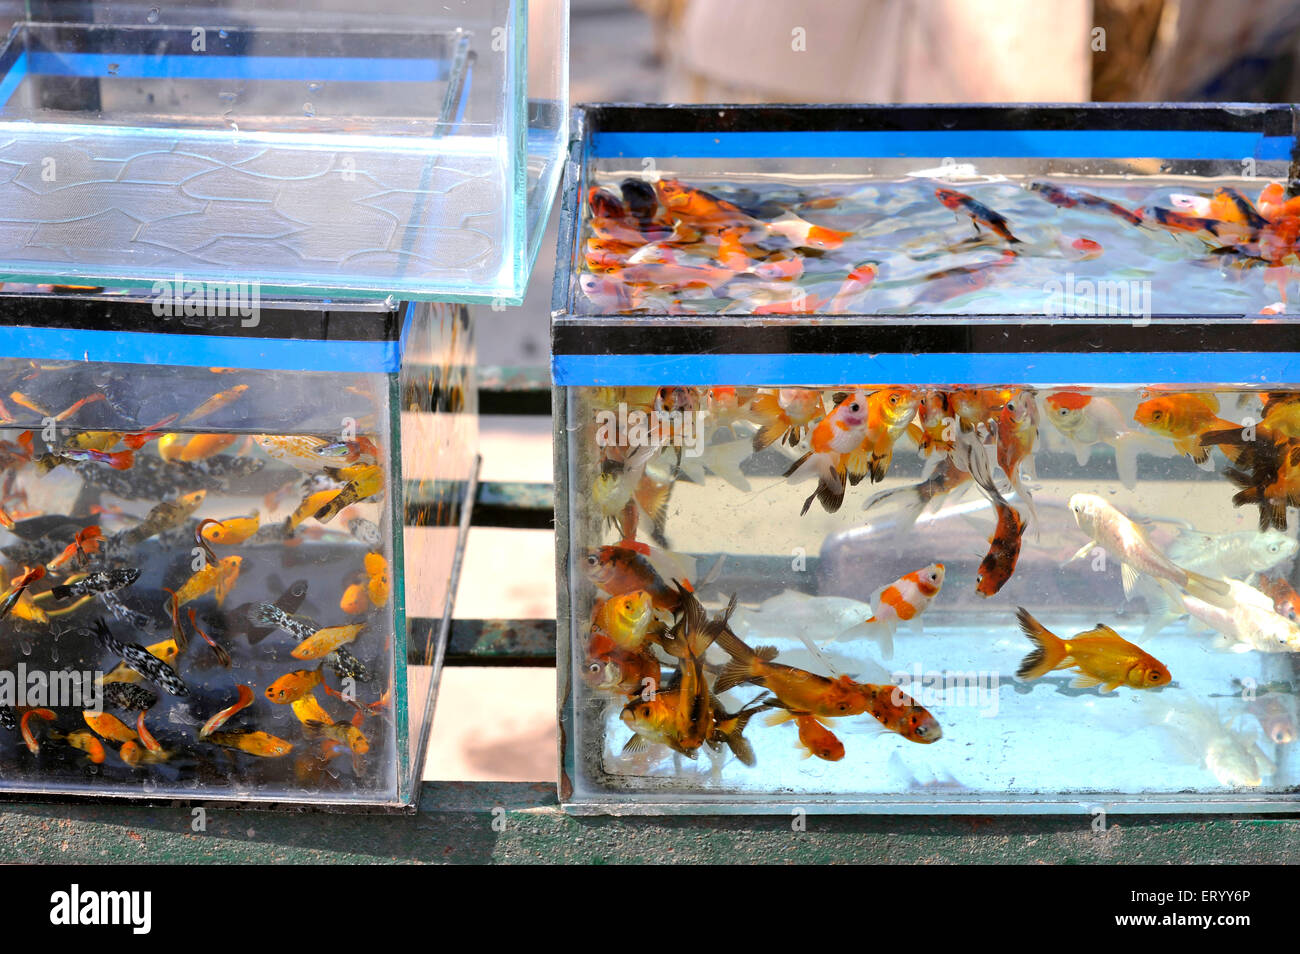 At sunday aquarium fish market hi-res stock photography and images - Alamy